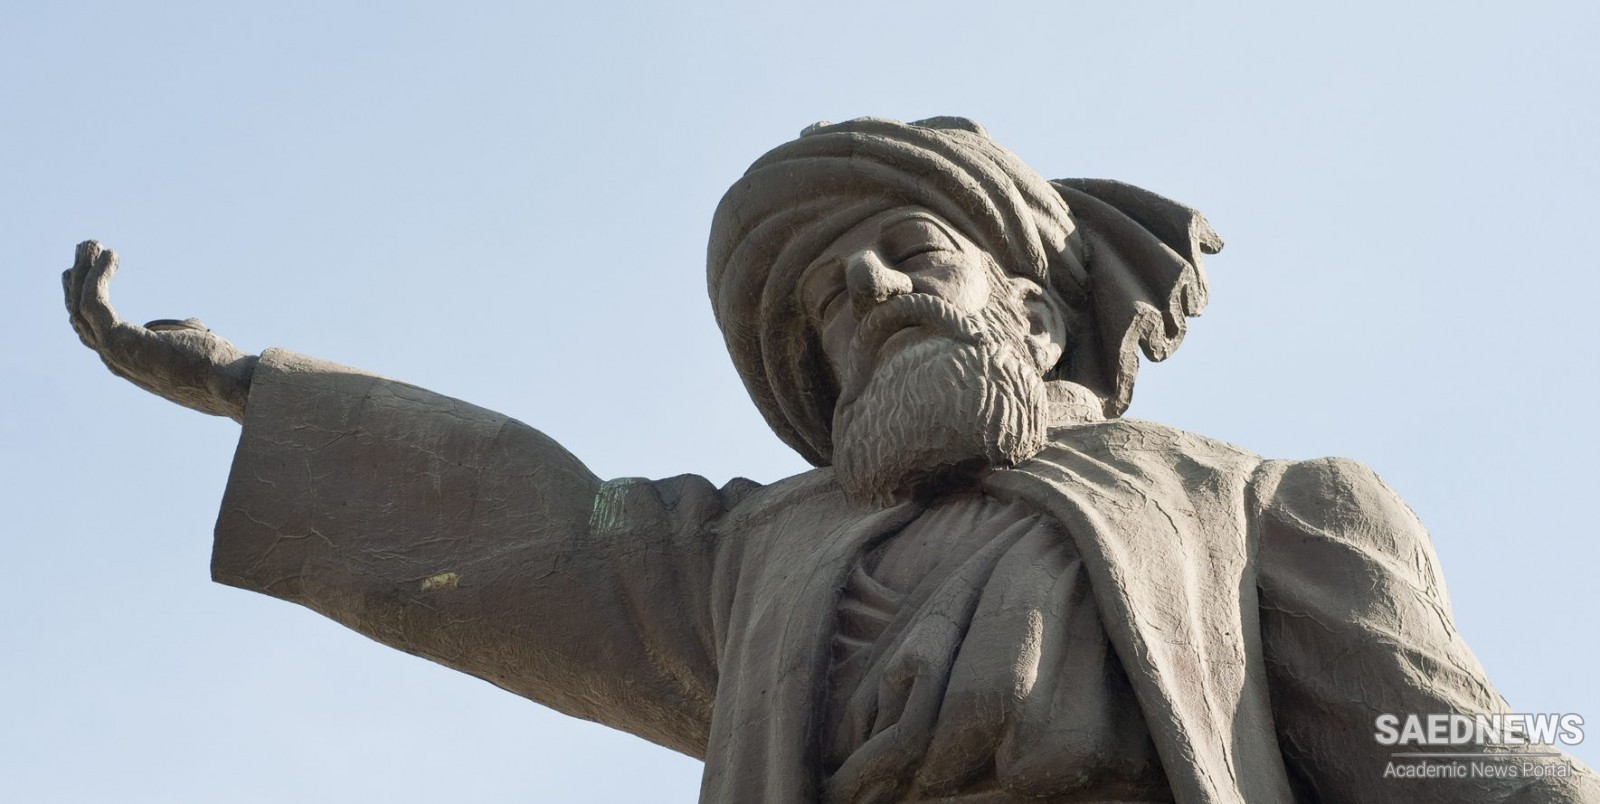 Maulana Jalal Al Din Mohammad Rumi: King of Mystical Poetry and Wisdom (1207-1273)